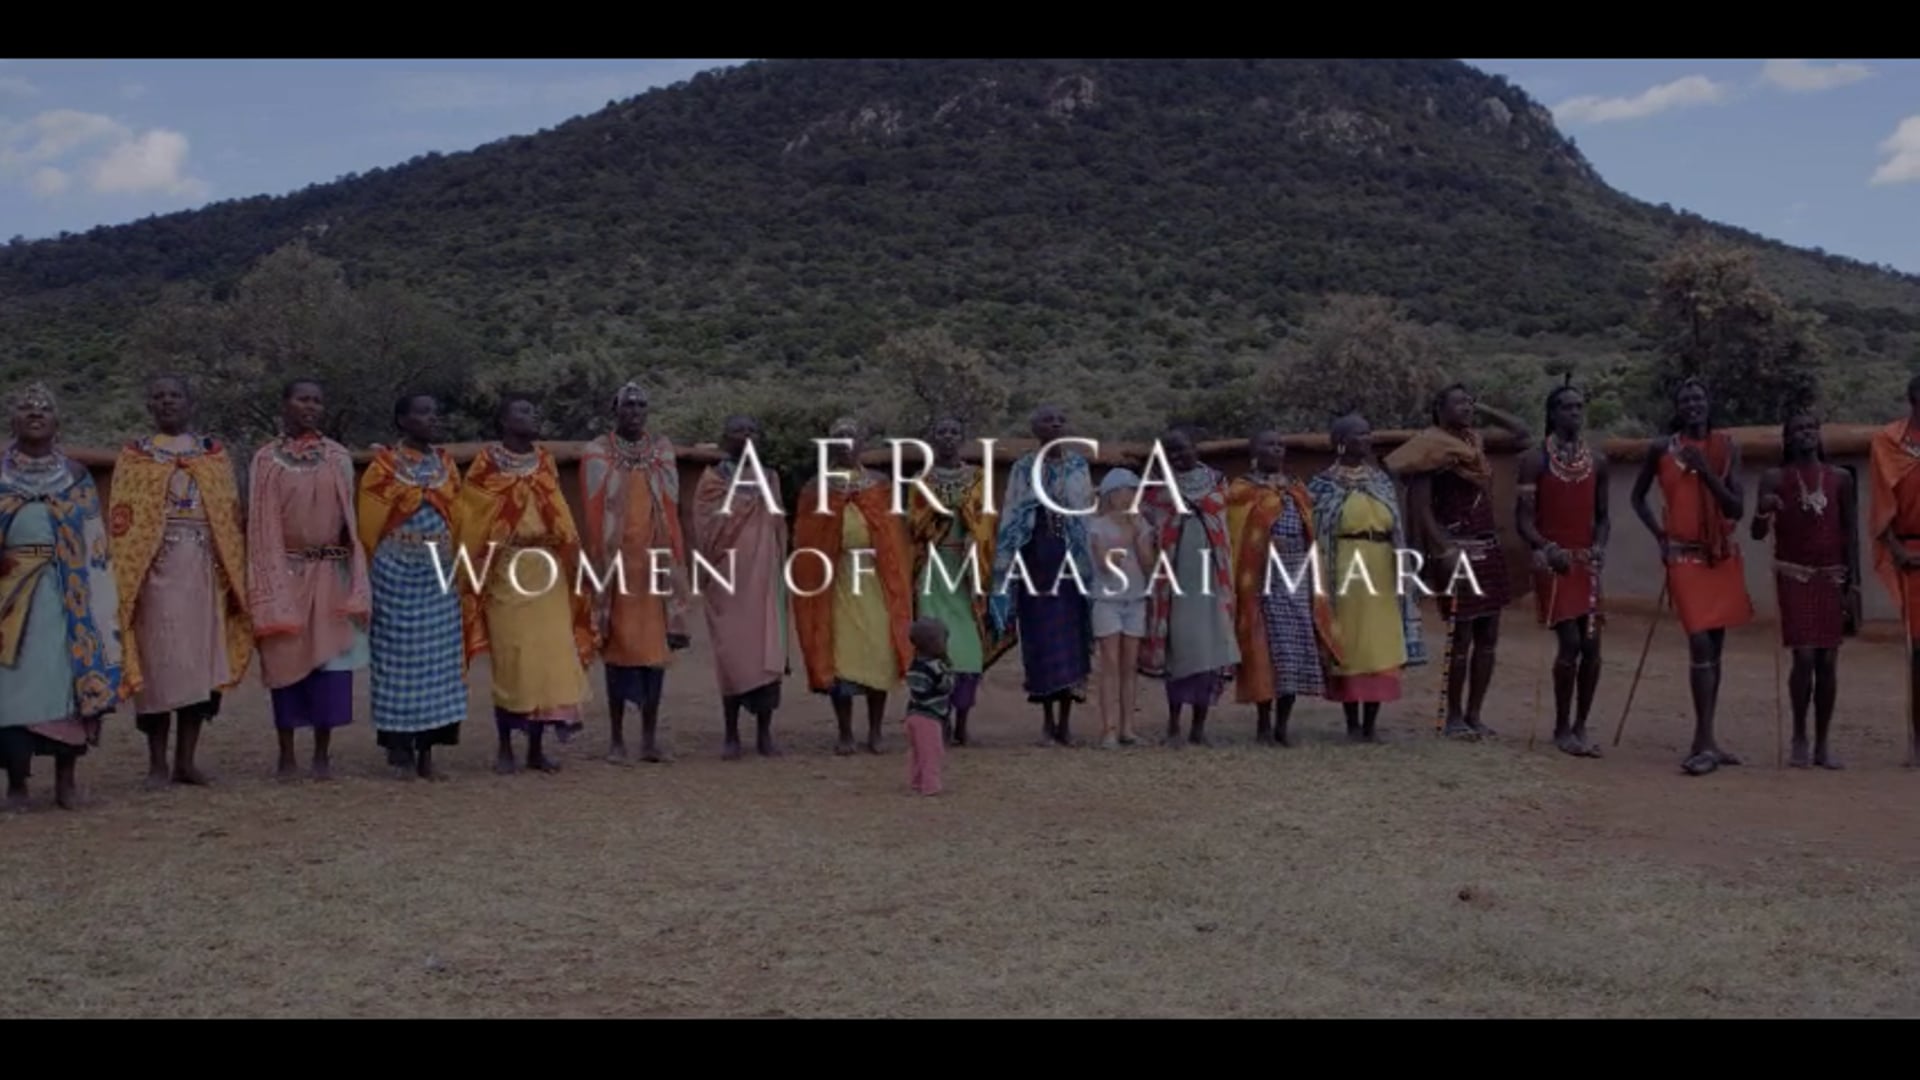 Africa Women of Maasai Mara